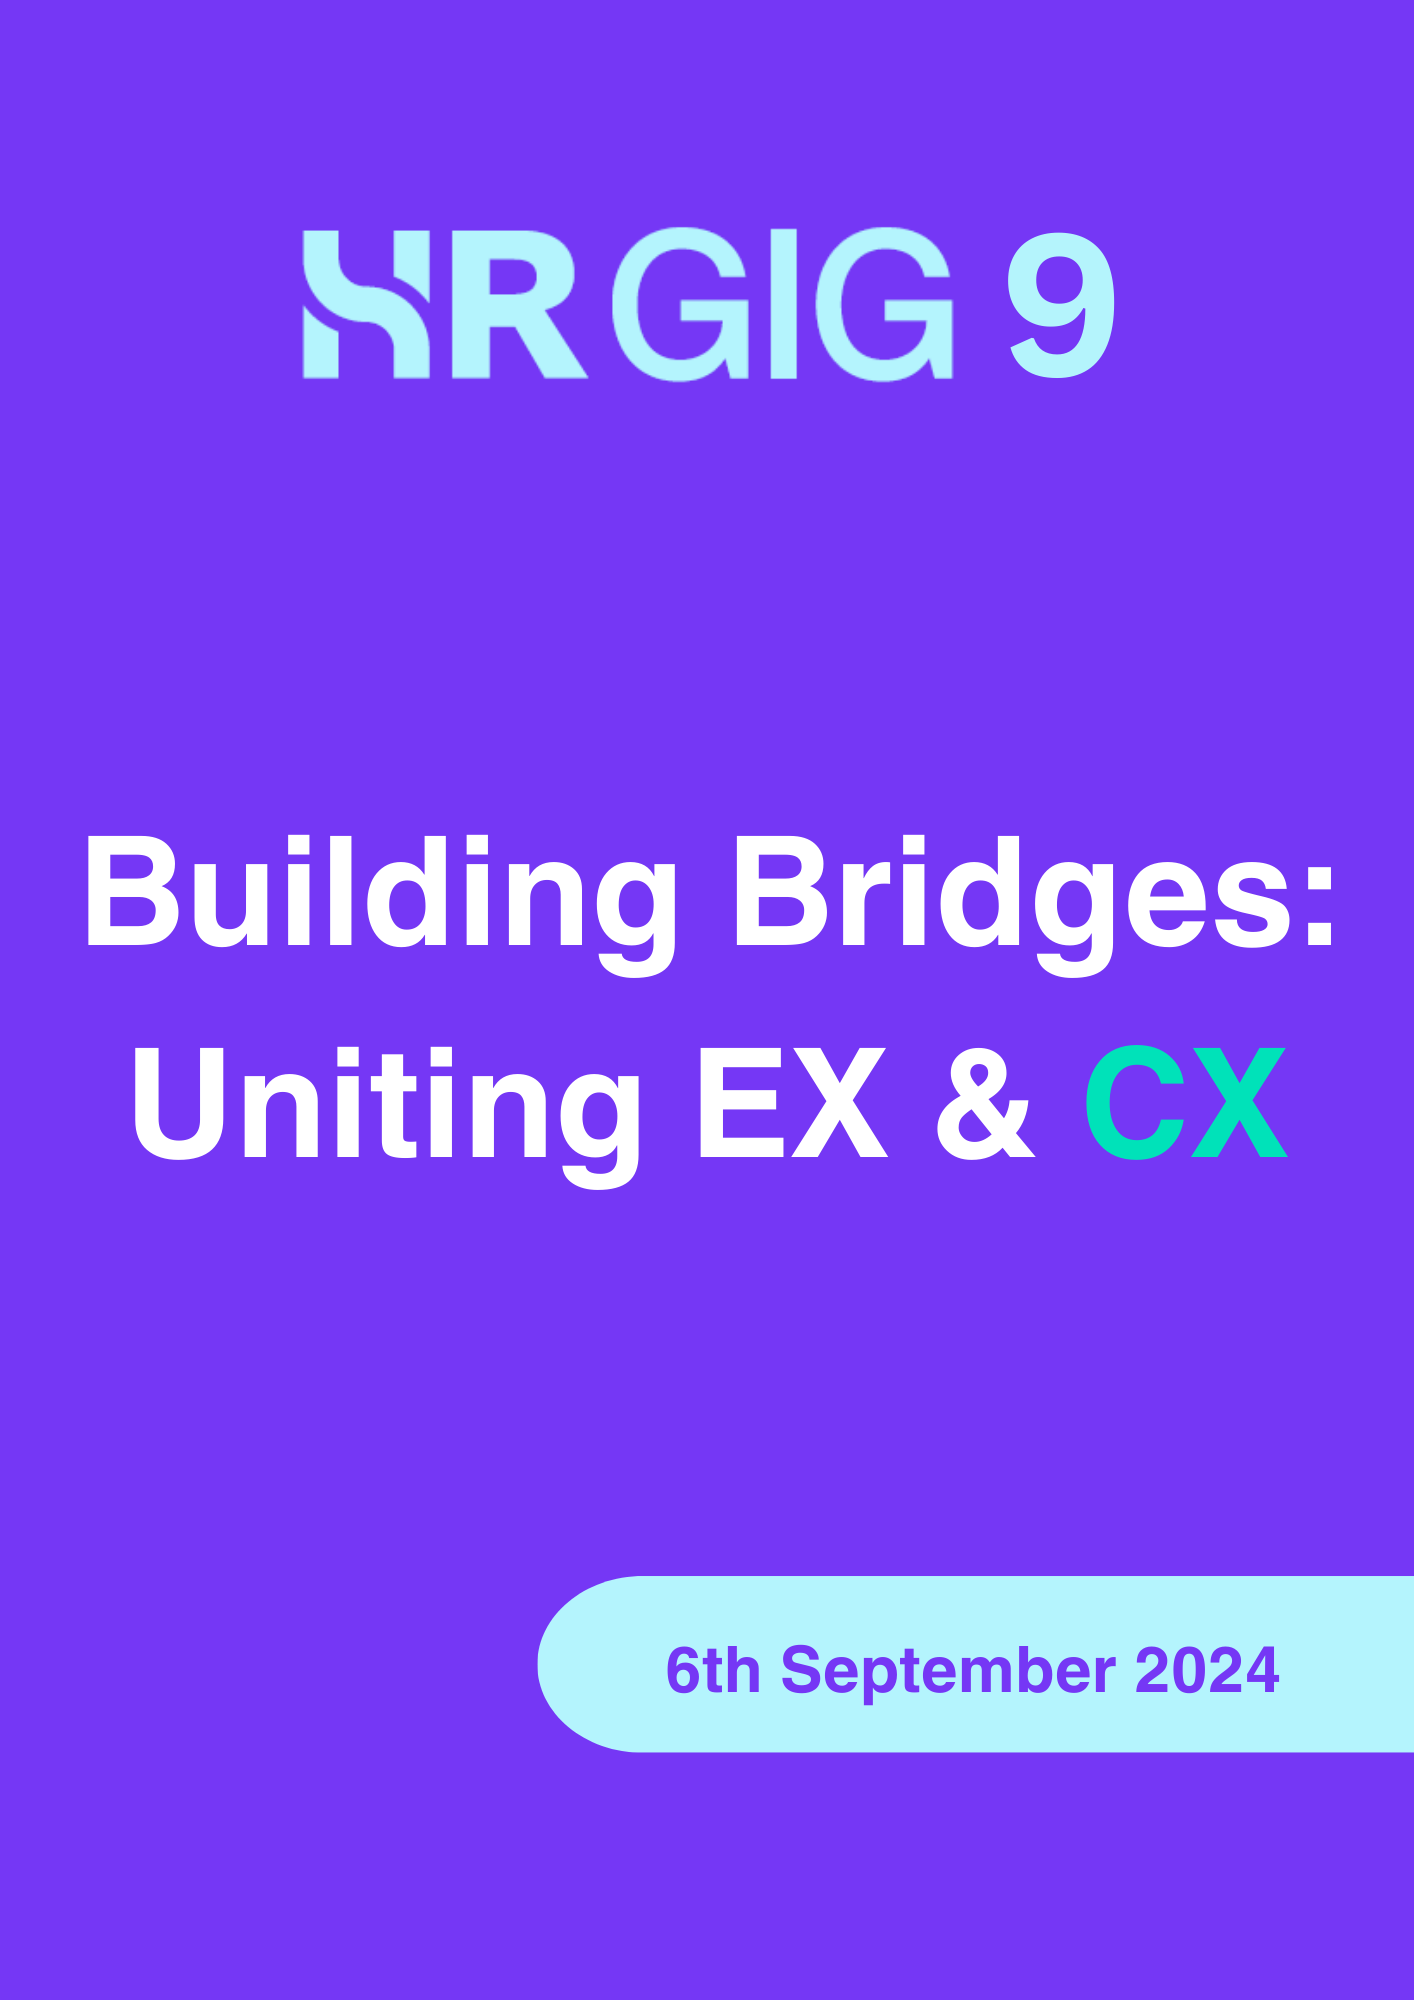 HR GIG9: Building Bridges Uniting EX & CX